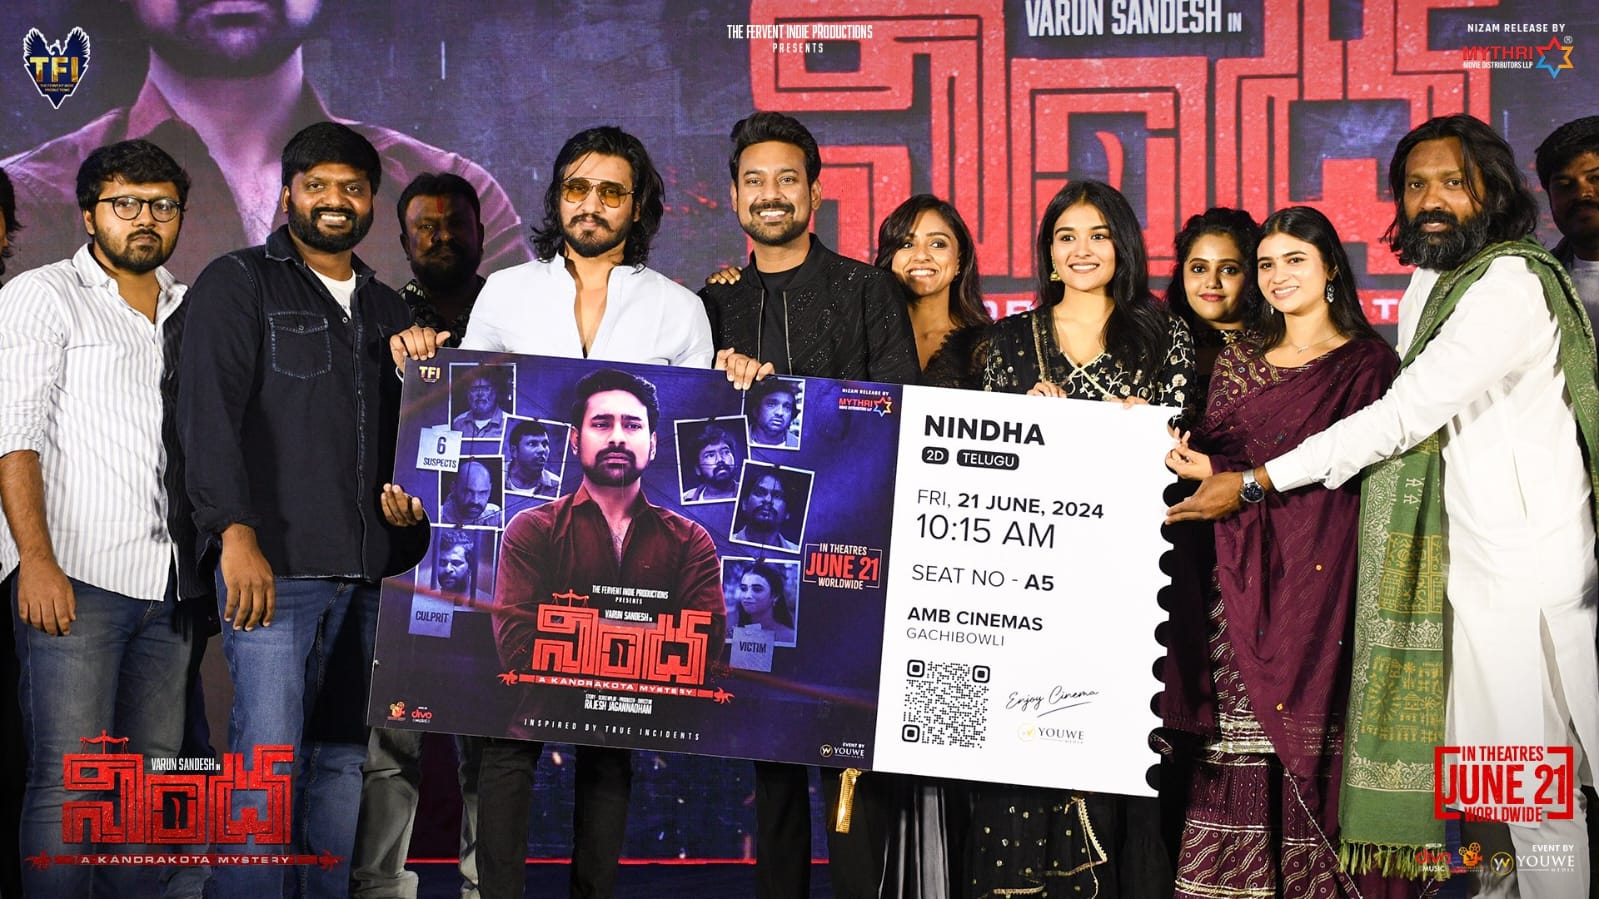 Nindha should become a milestone film in Varun Sandesh career: Nikhil